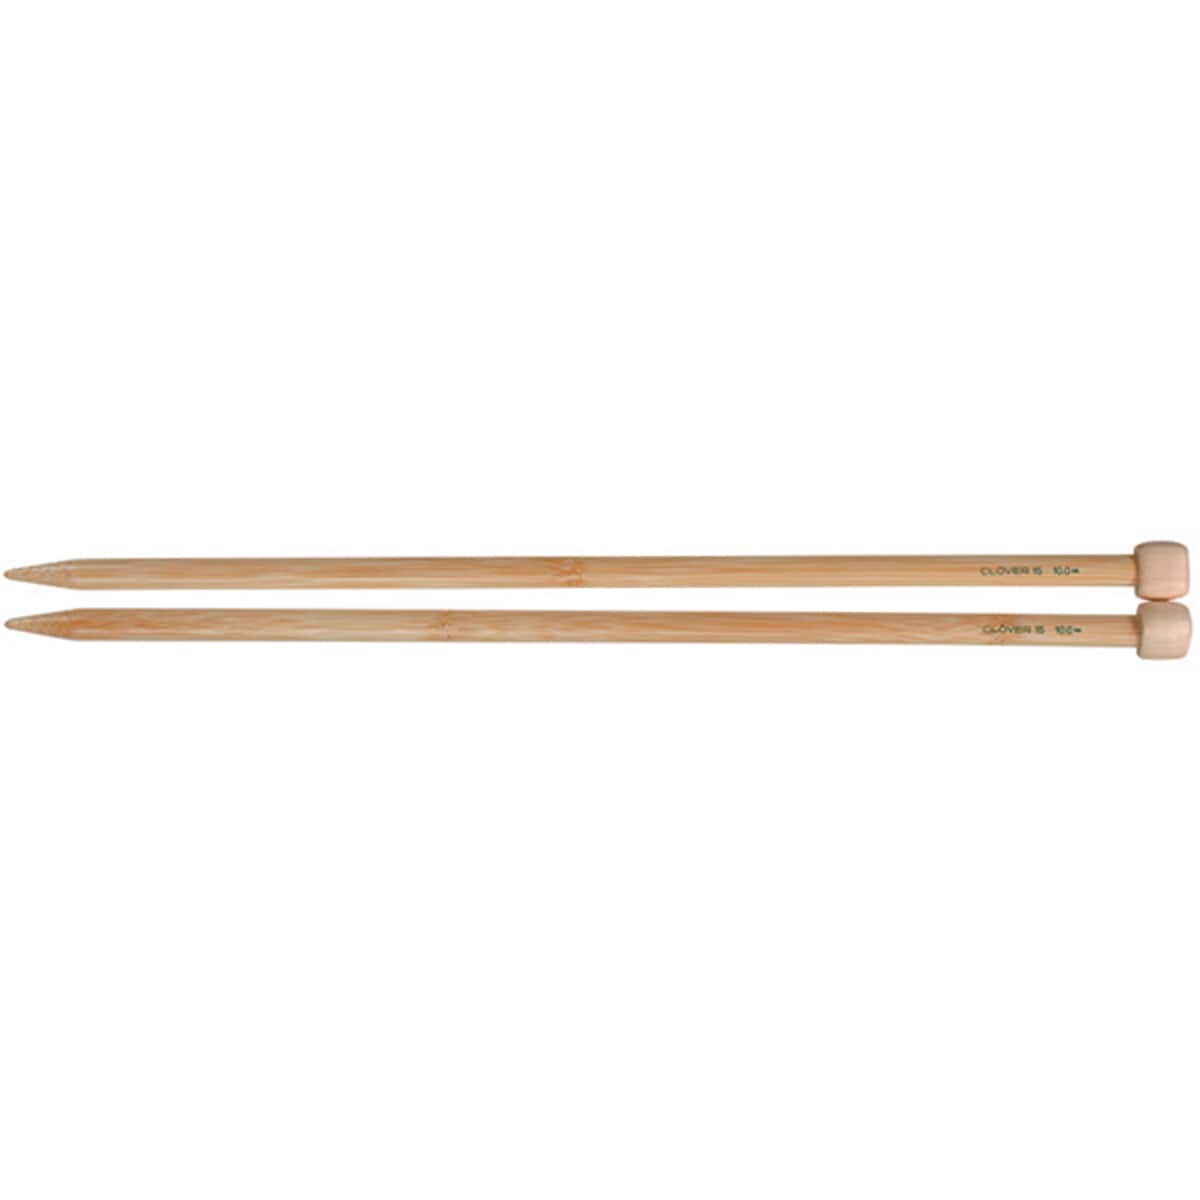 Bamboo Single Point Knitting Needles 13 14 size 1